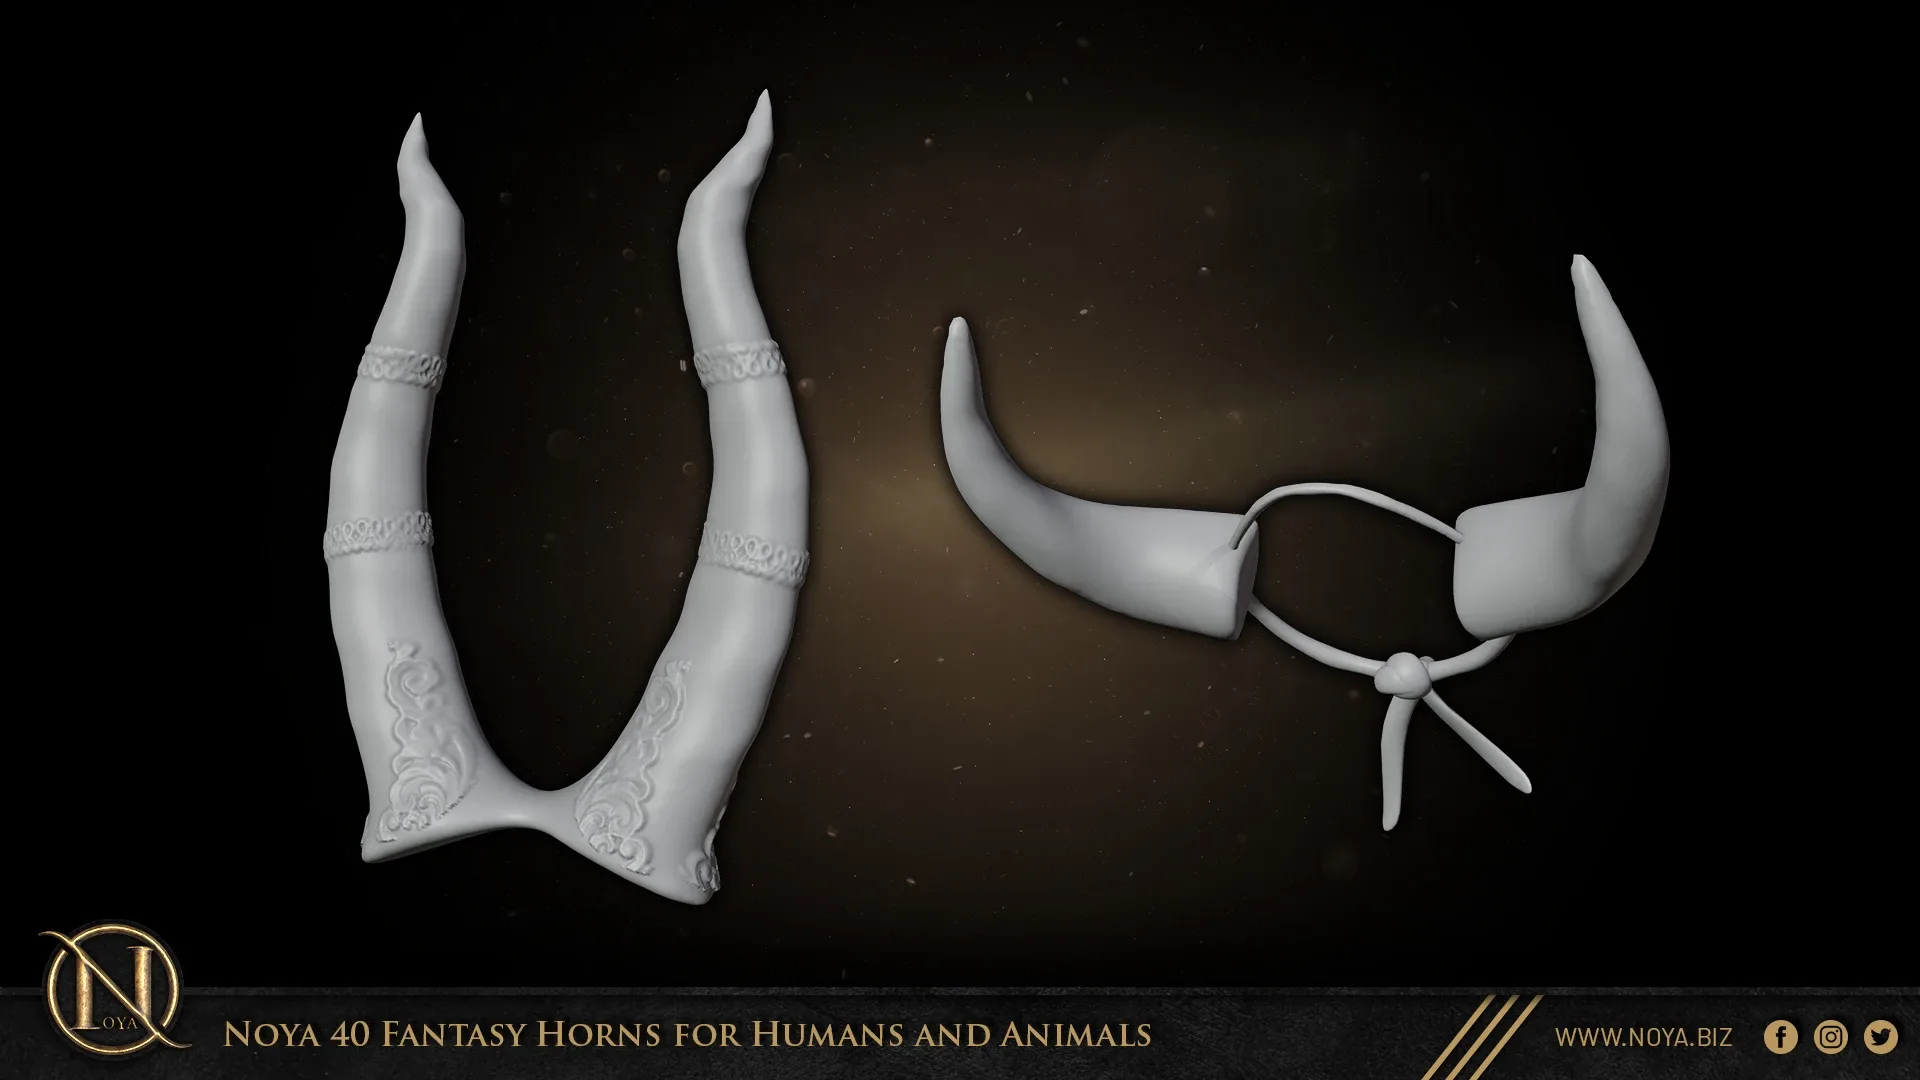 Noya 40 Fantasy Horns for Humans and Animals